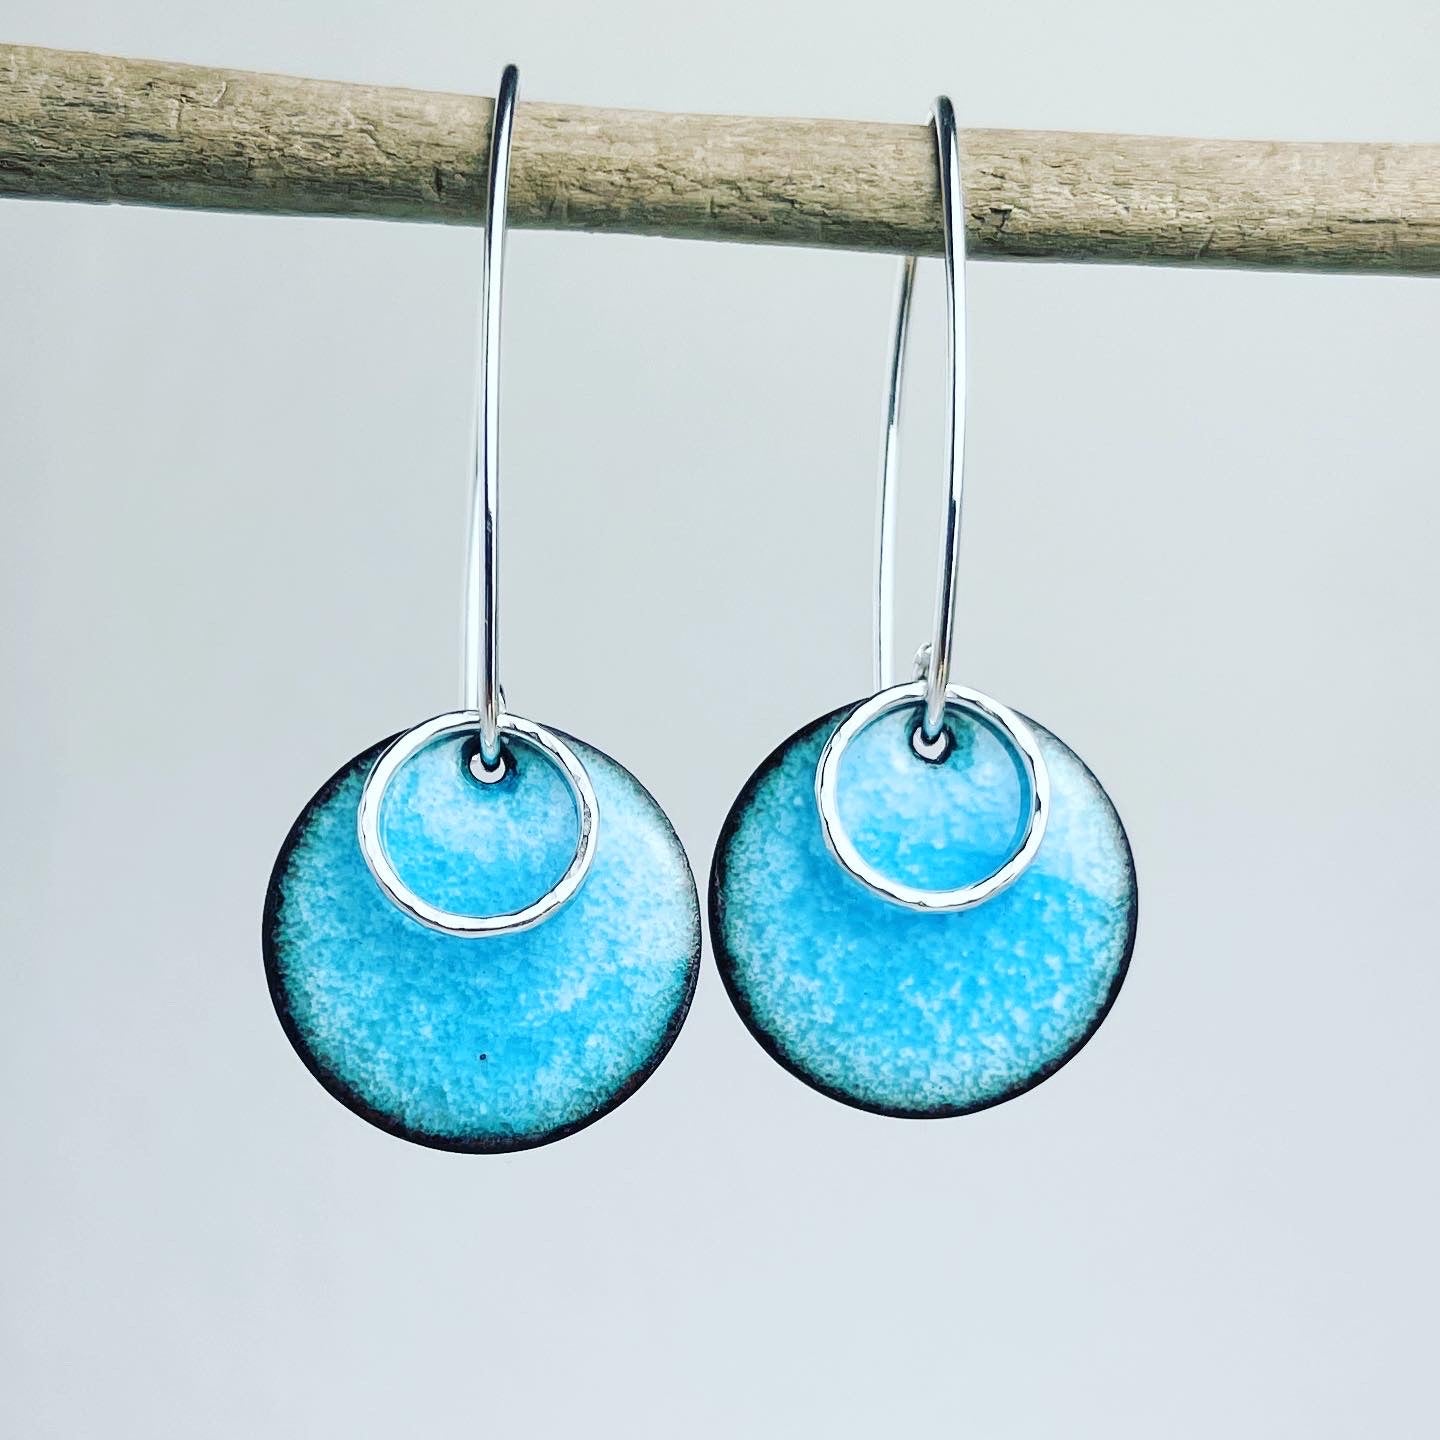 Turquoise Enamel Disc Earrings - The Nancy Smillie Shop - Art, Jewellery & Designer Gifts Glasgow